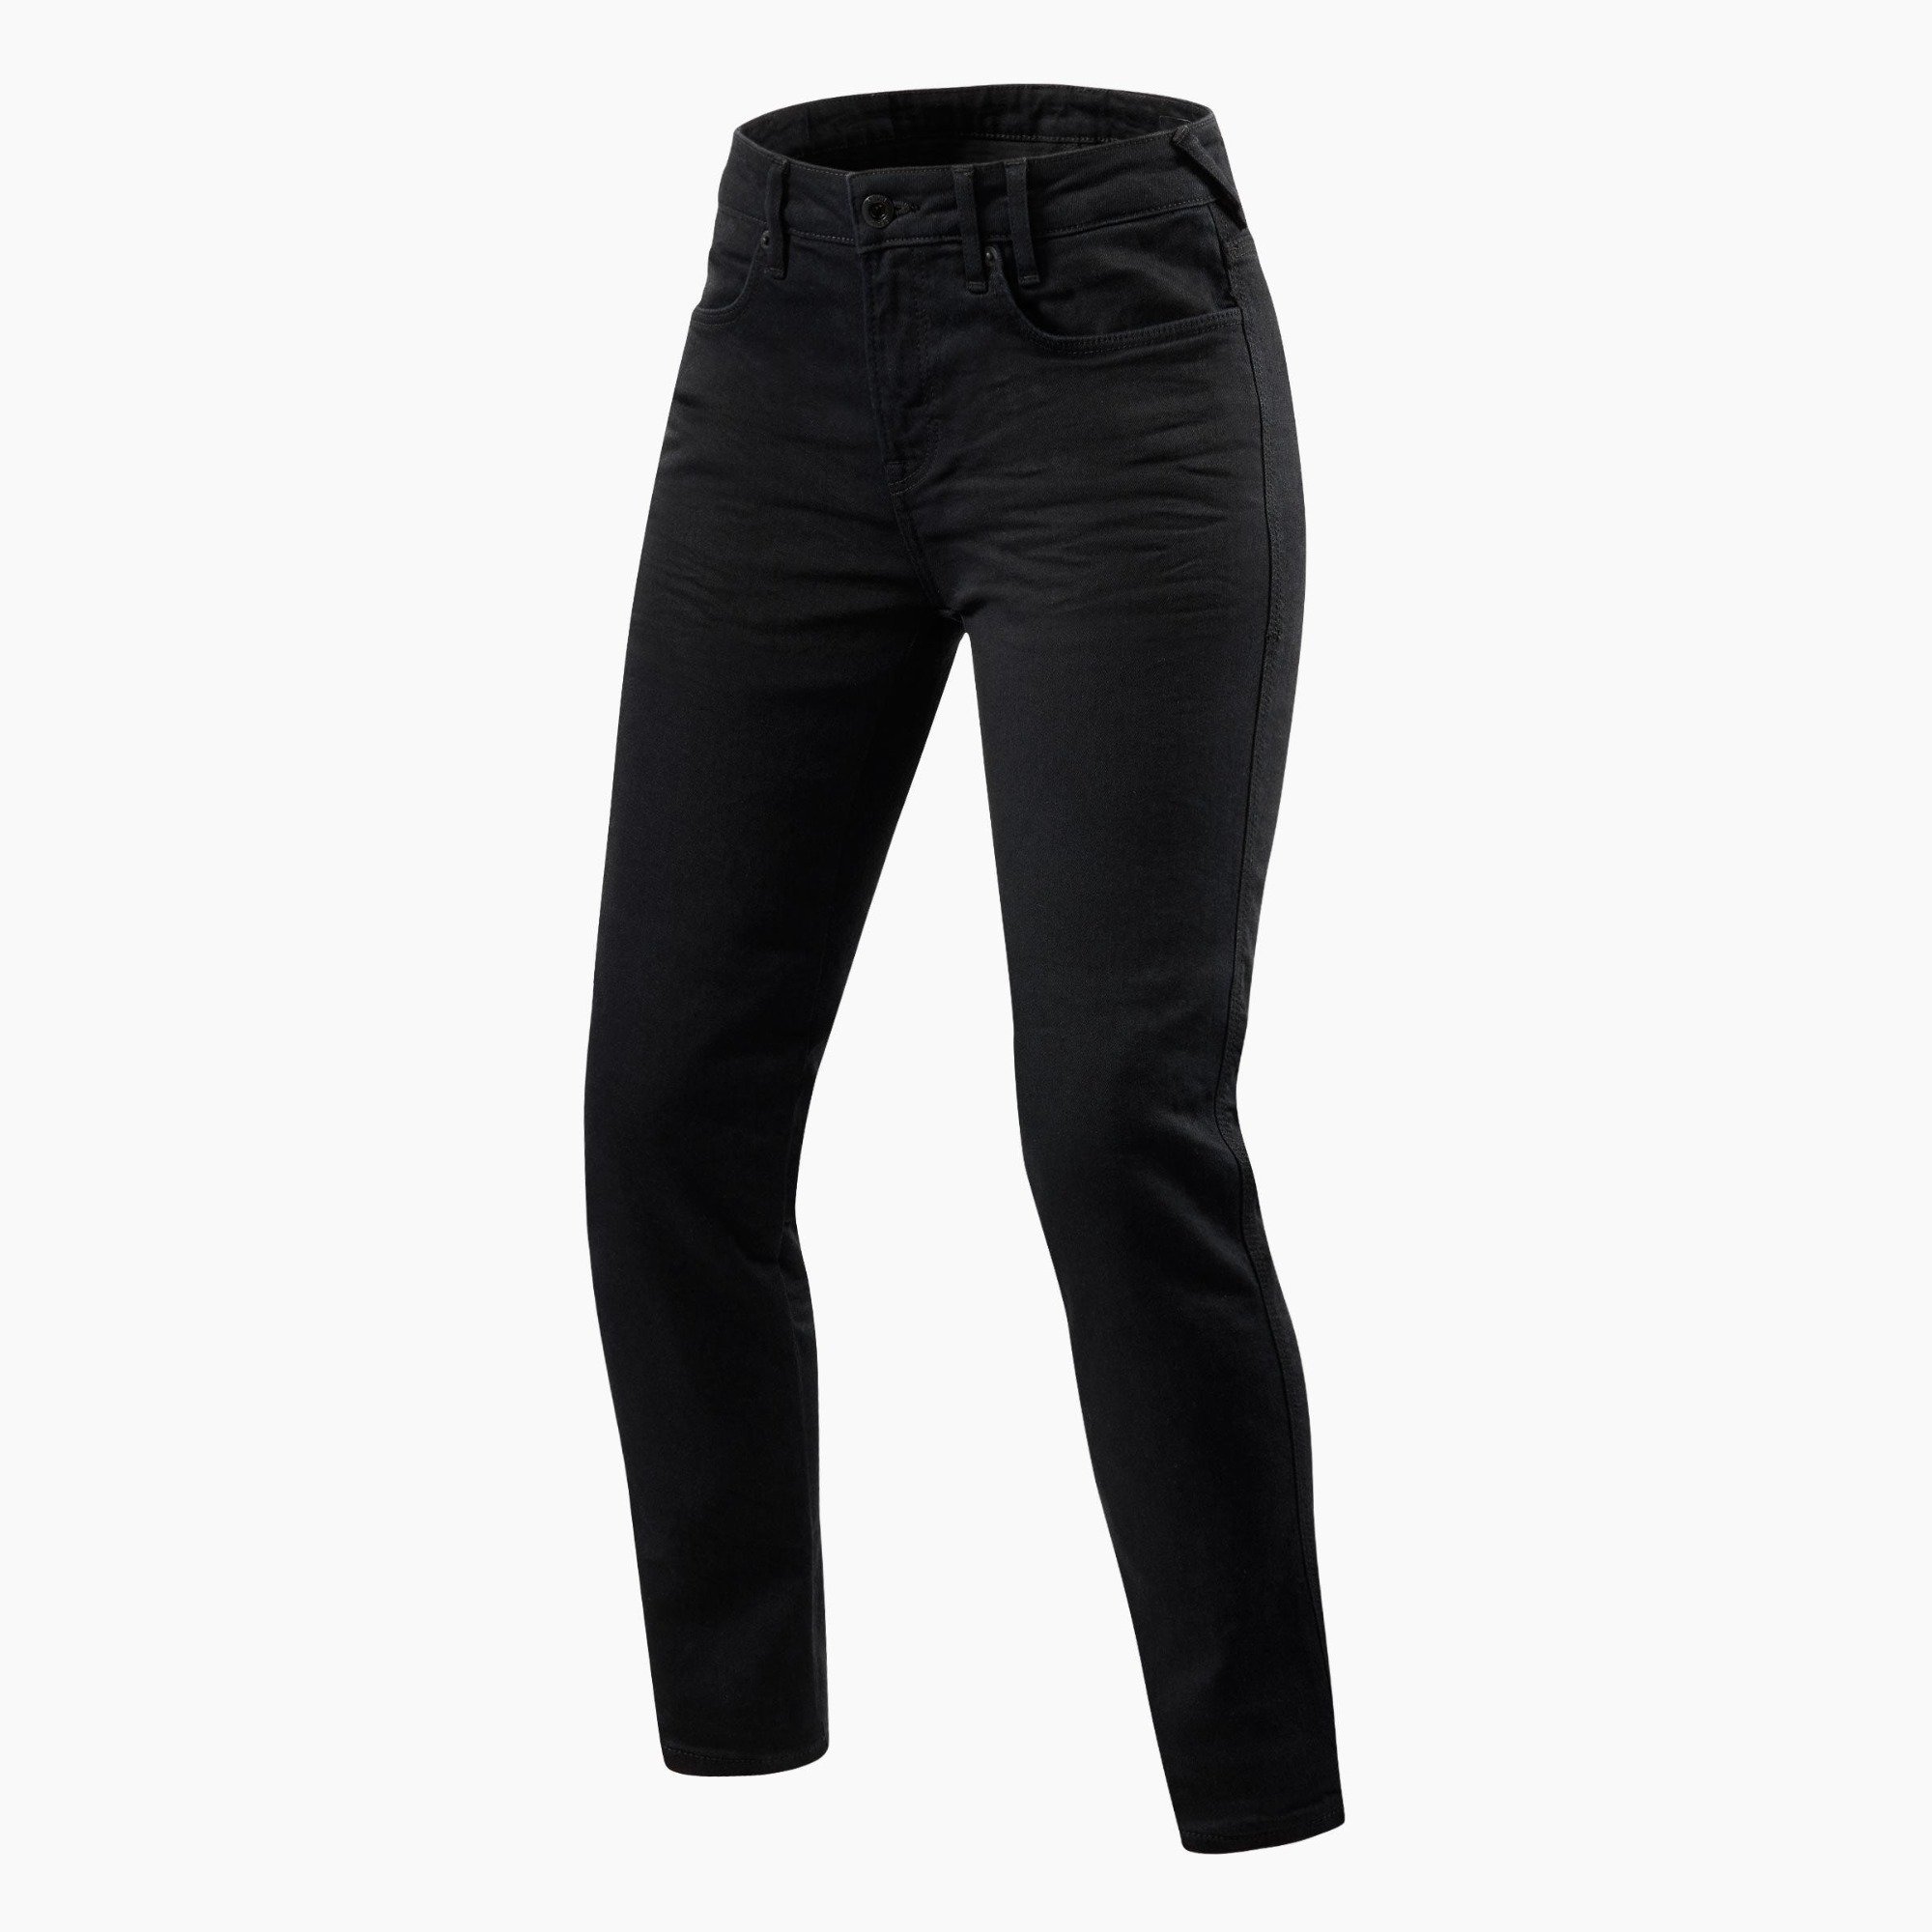 Image of REV'IT! Jeans Maple 2 Ladies SK Black Motorcycle Jeans Size L32/W32 EN